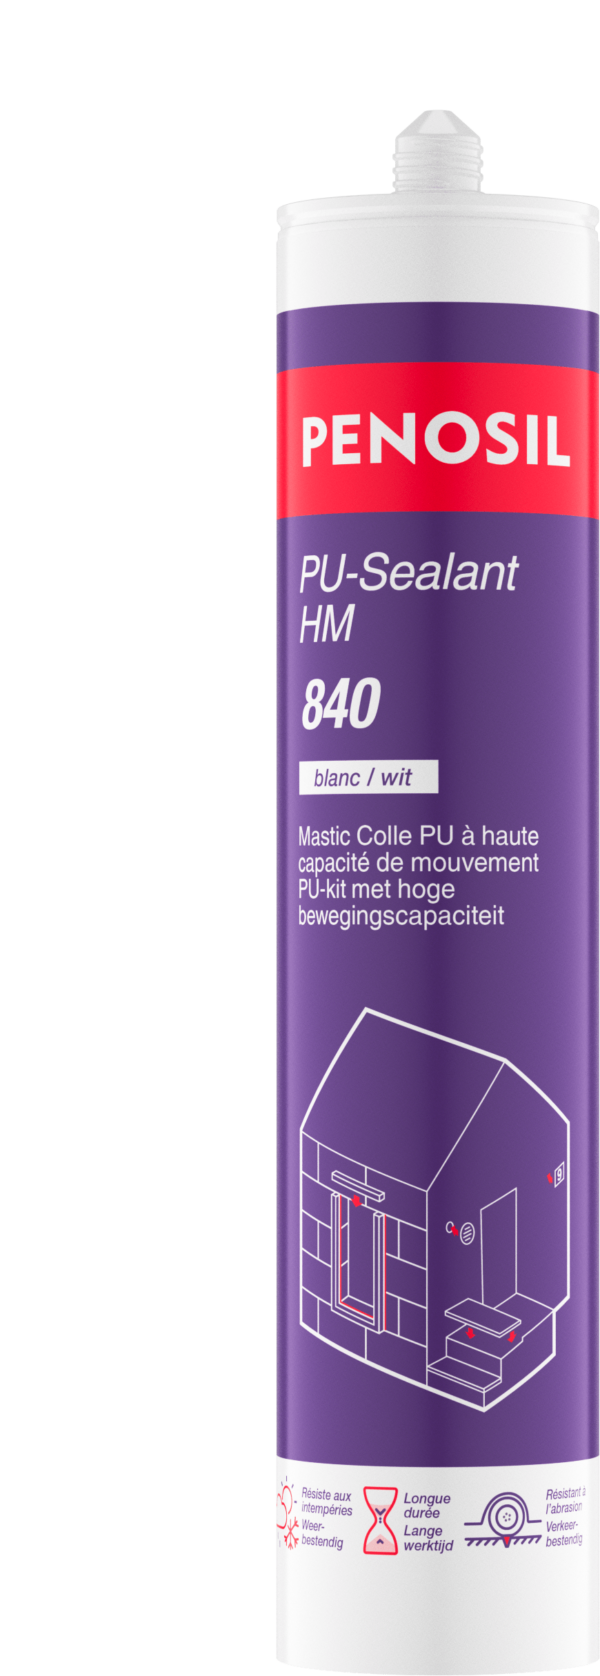 PENOSIL PU-Sealant HM 840 mastic polyuréthane